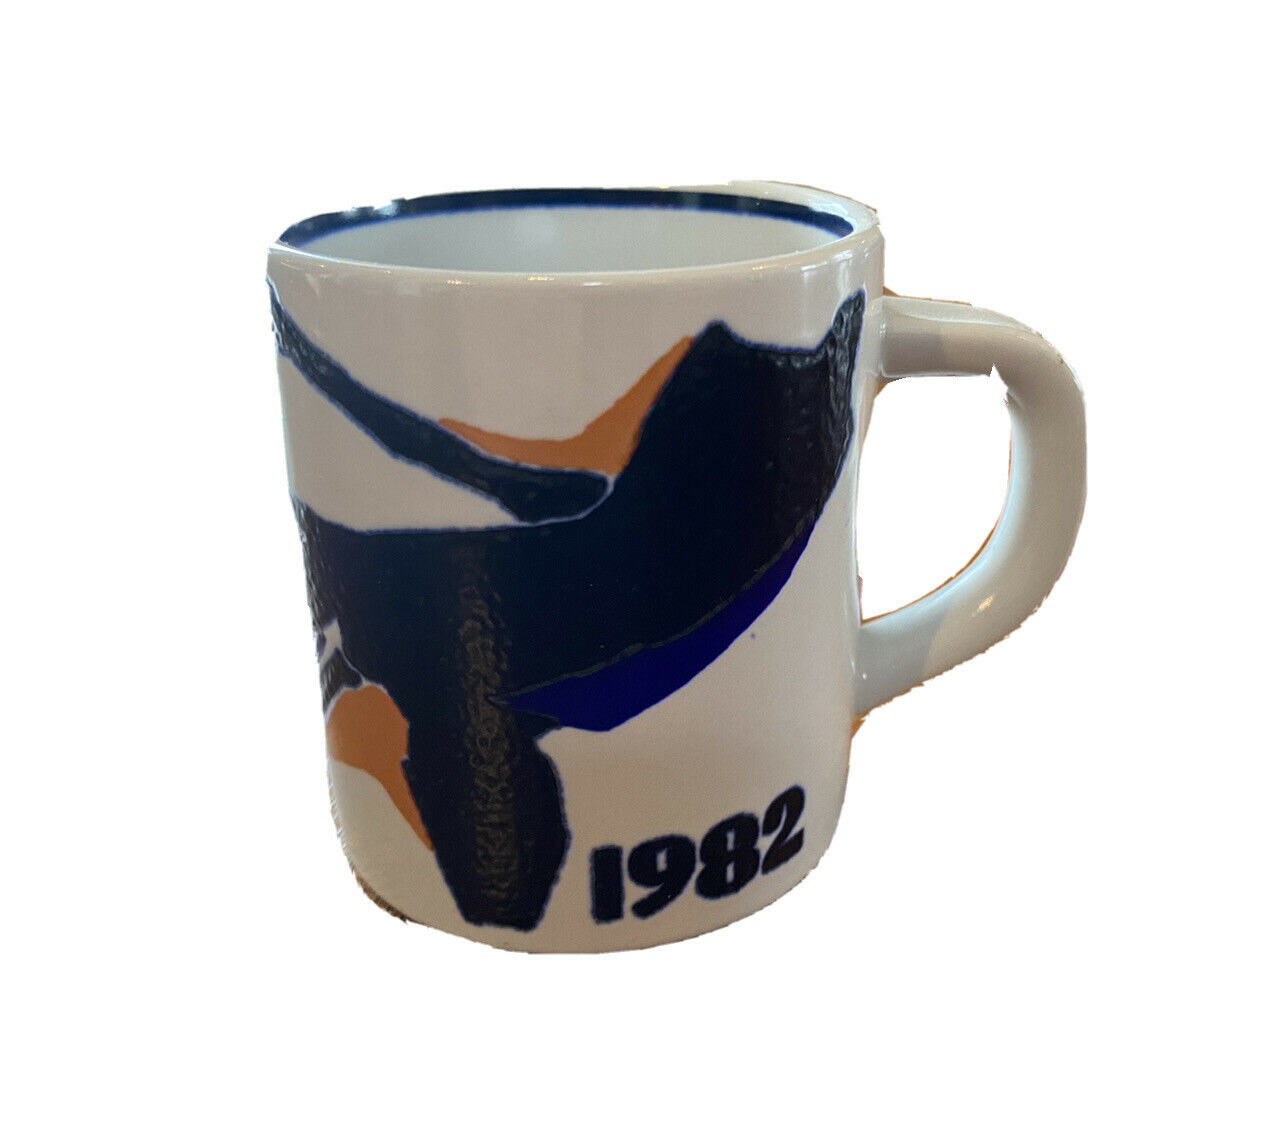 1982 Vtg Mid Century Danish Modern Royal Copenhagen Year Annual Pottery Mug Cup